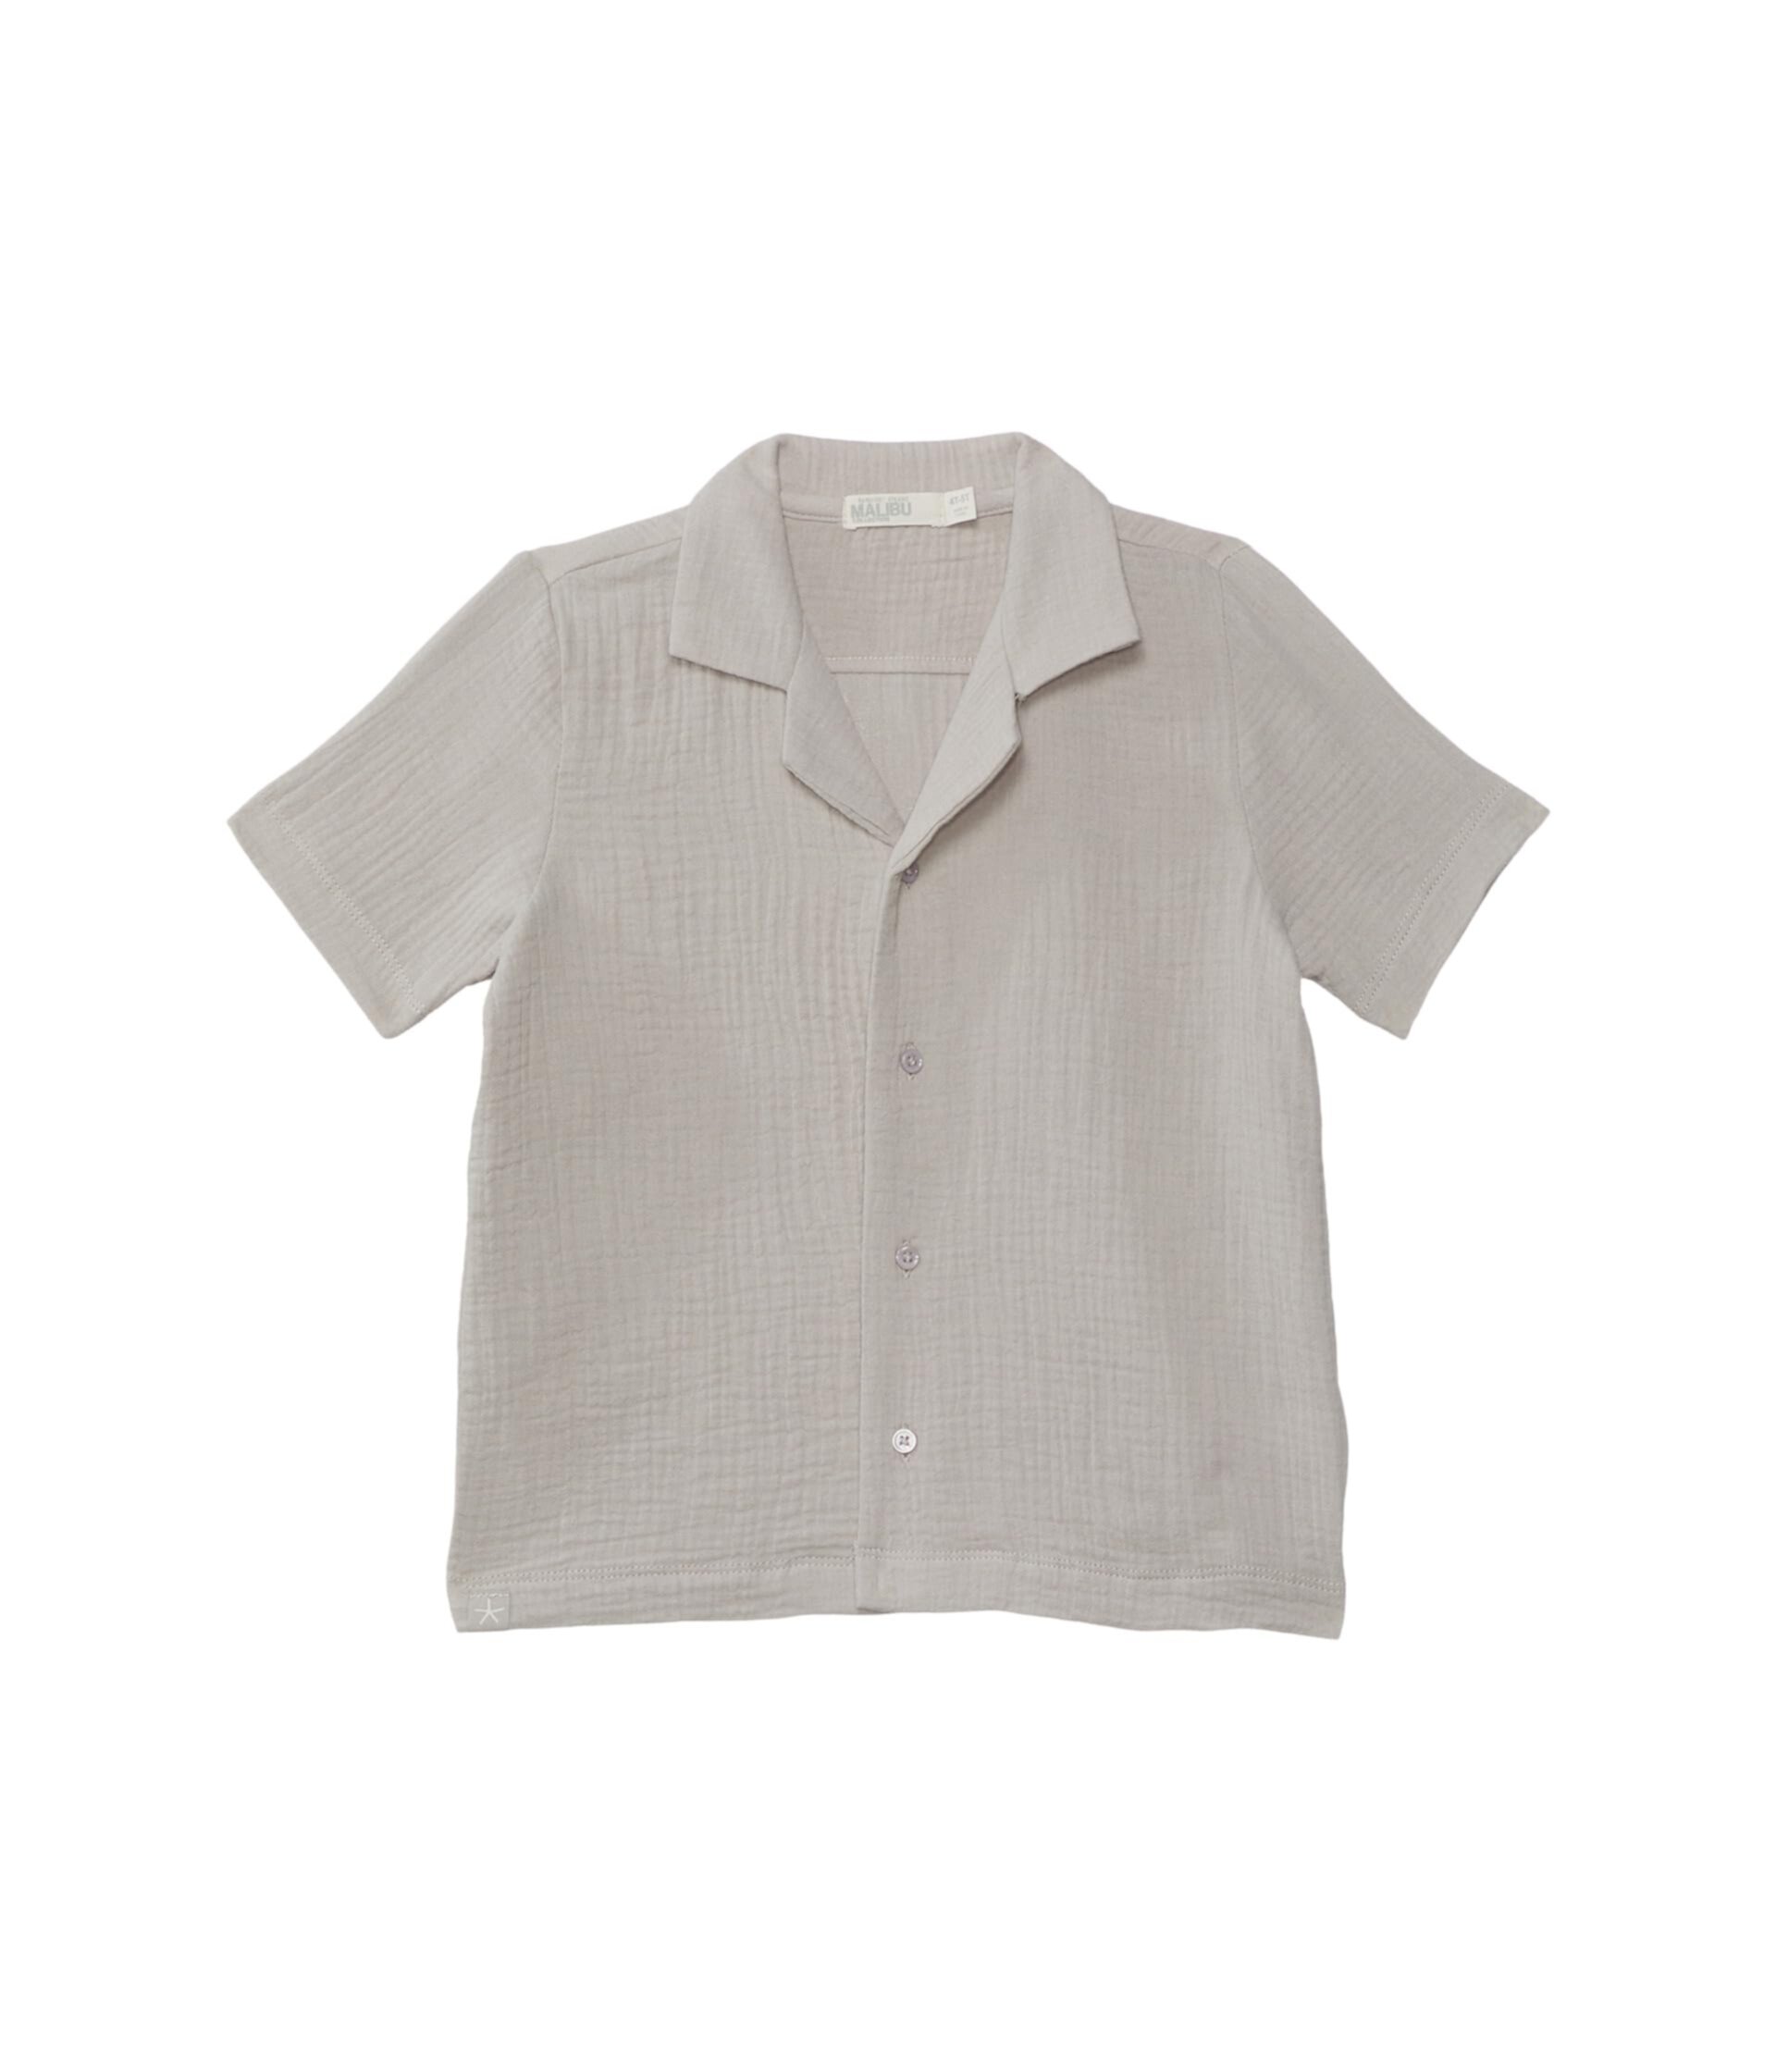 CozyChic® Malibu Collection Sun Soaked Shirt (Toddler) Barefoot Dreams Kids